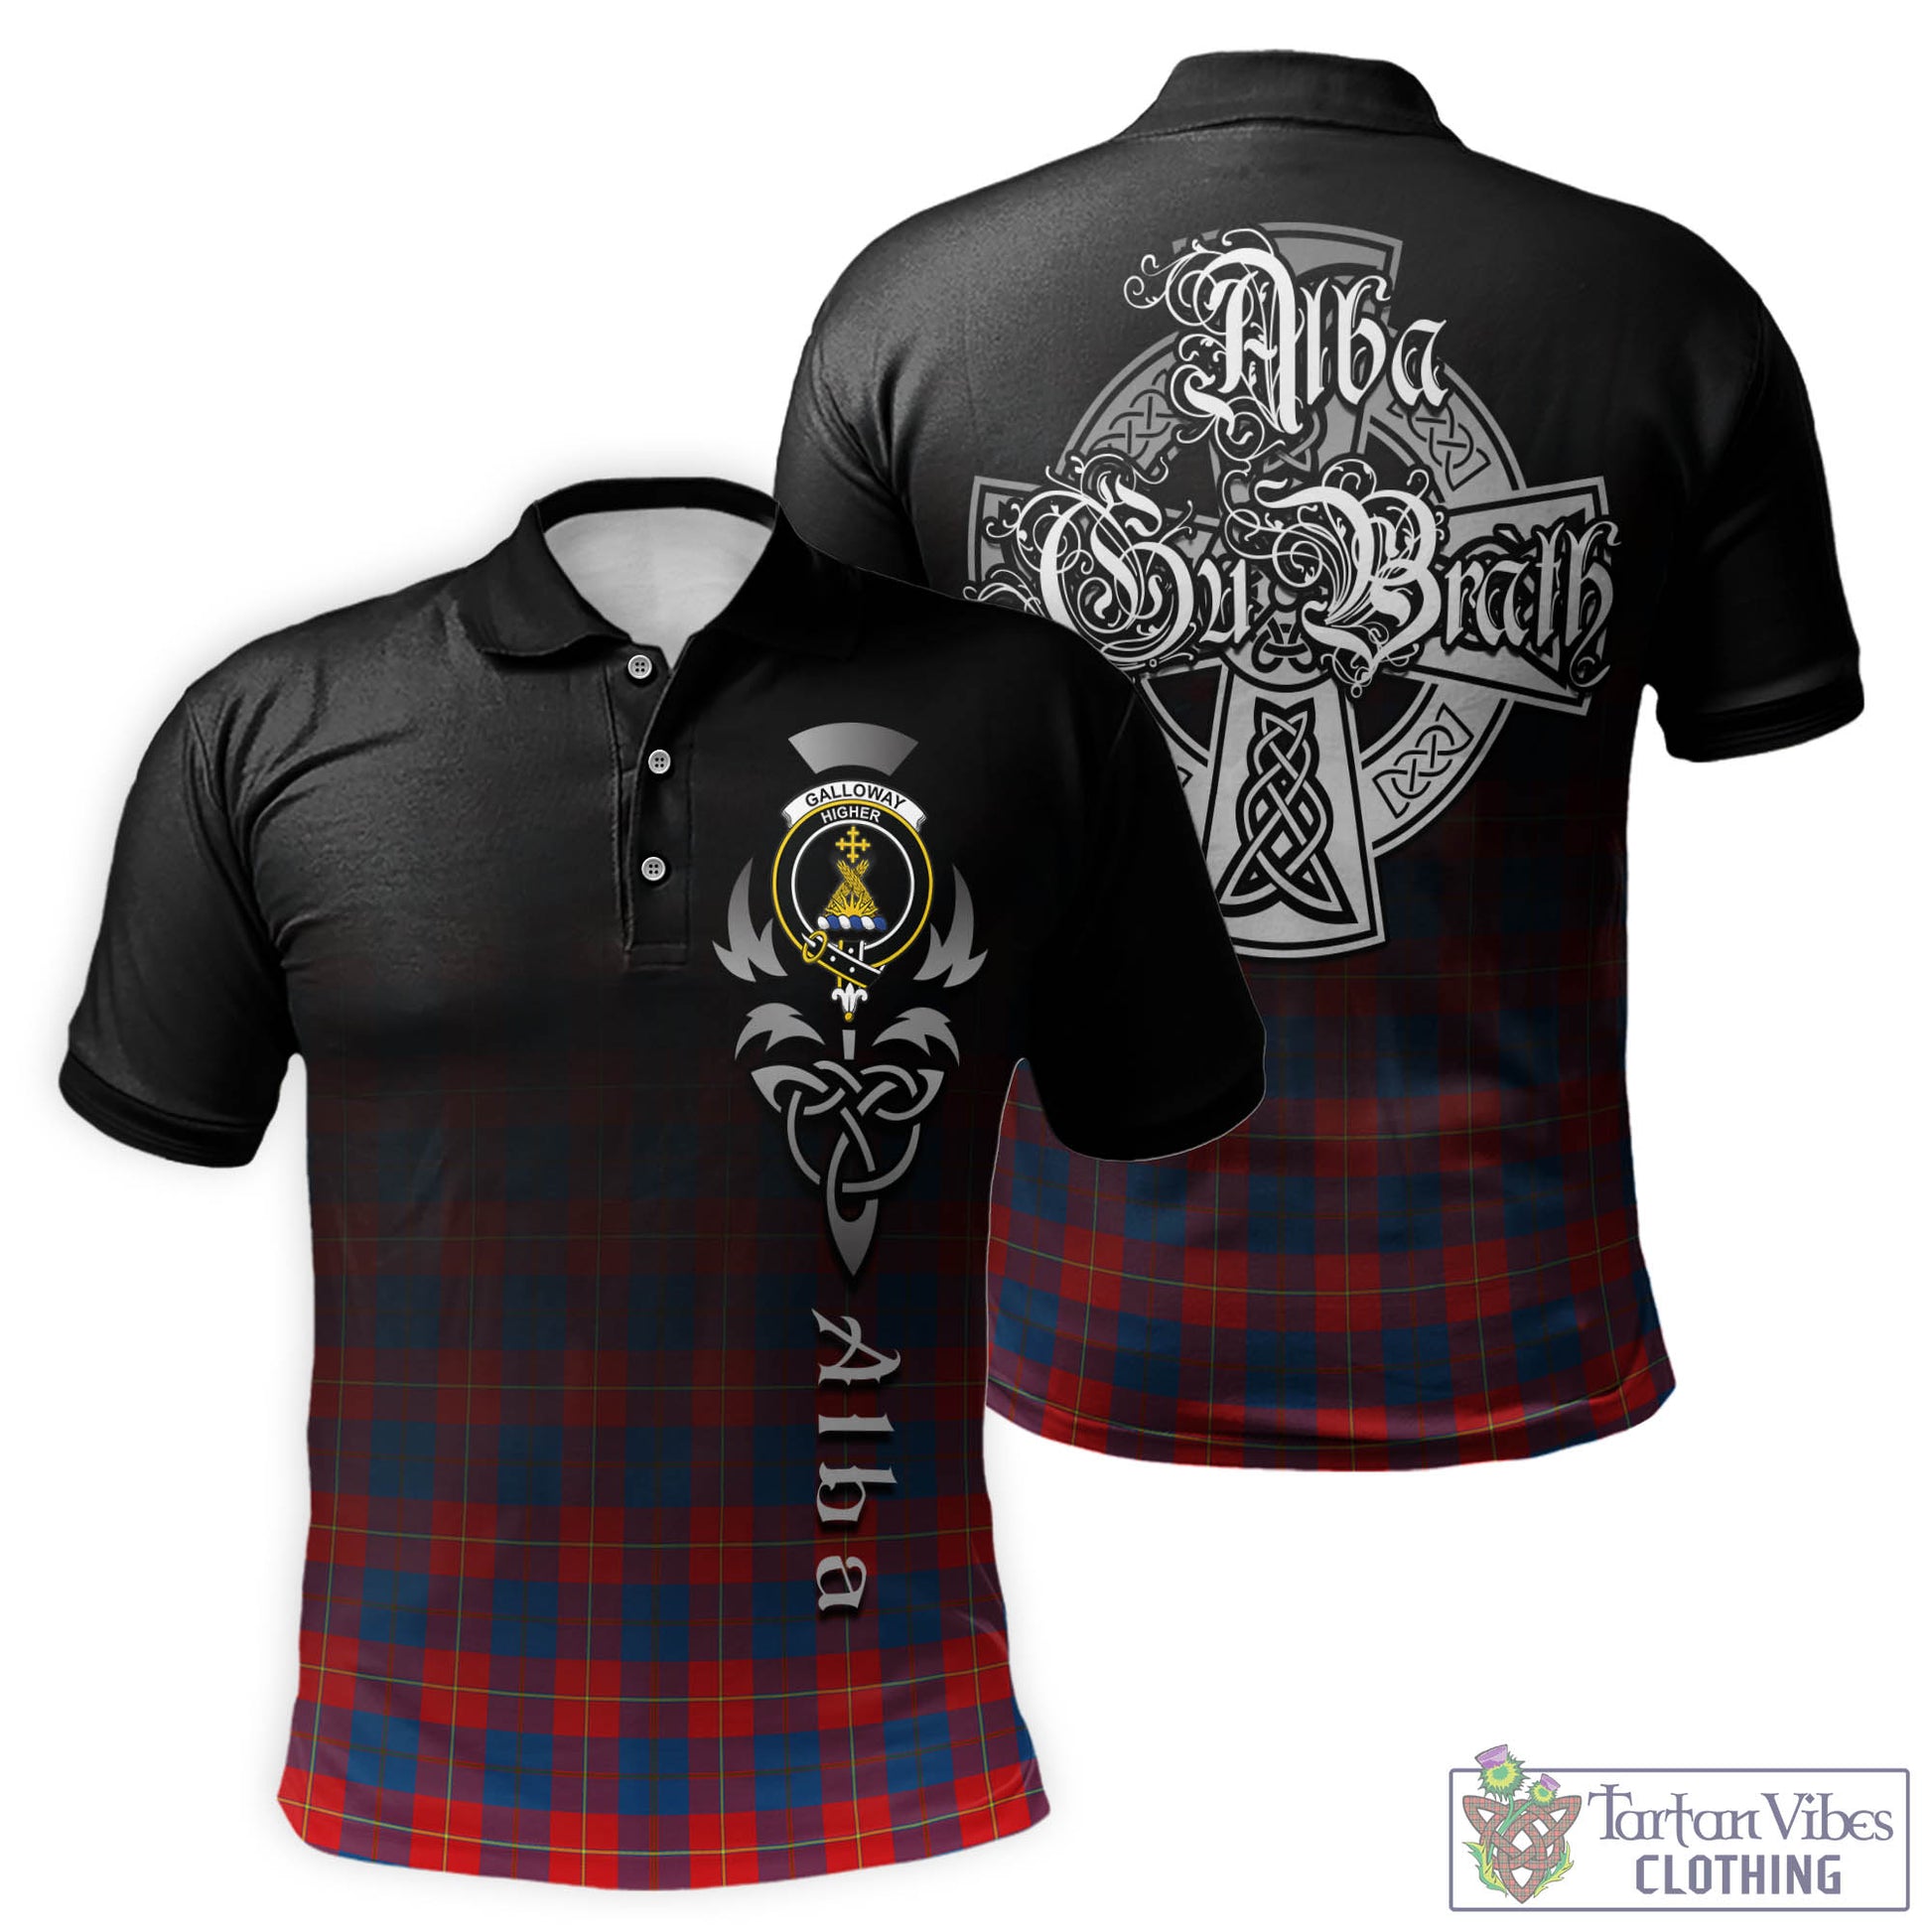 Tartan Vibes Clothing Galloway Red Tartan Polo Shirt Featuring Alba Gu Brath Family Crest Celtic Inspired